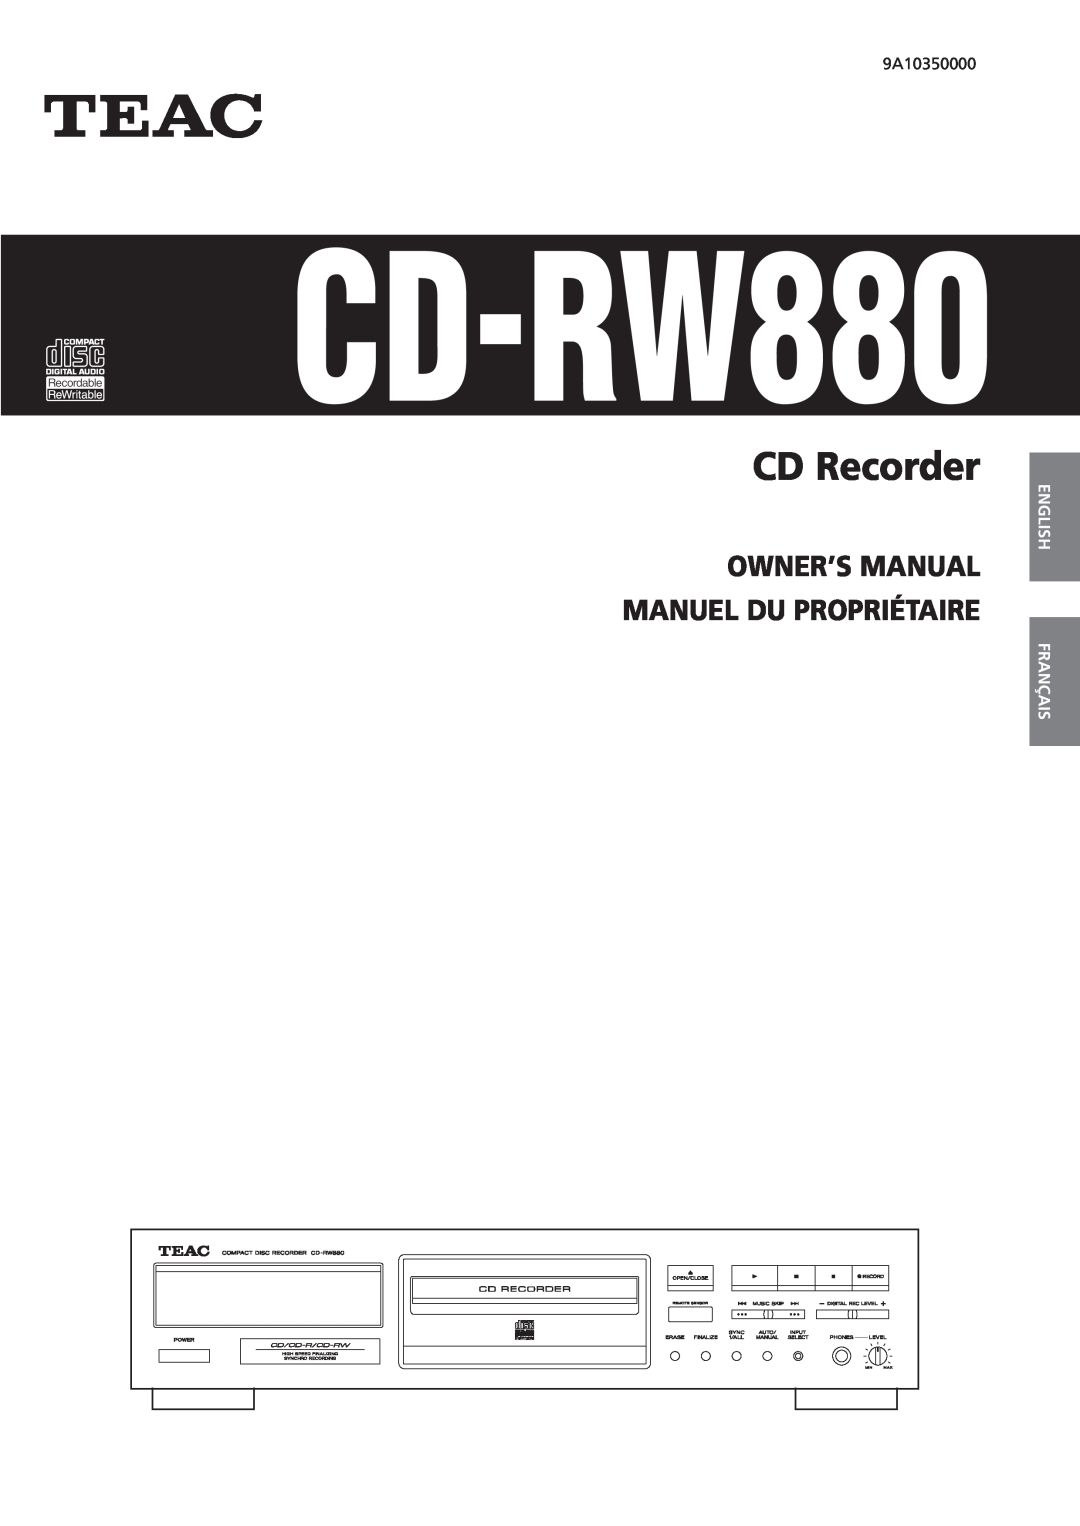 Sanyo CD-RW880 owner manual English, Français, CD Recorder 